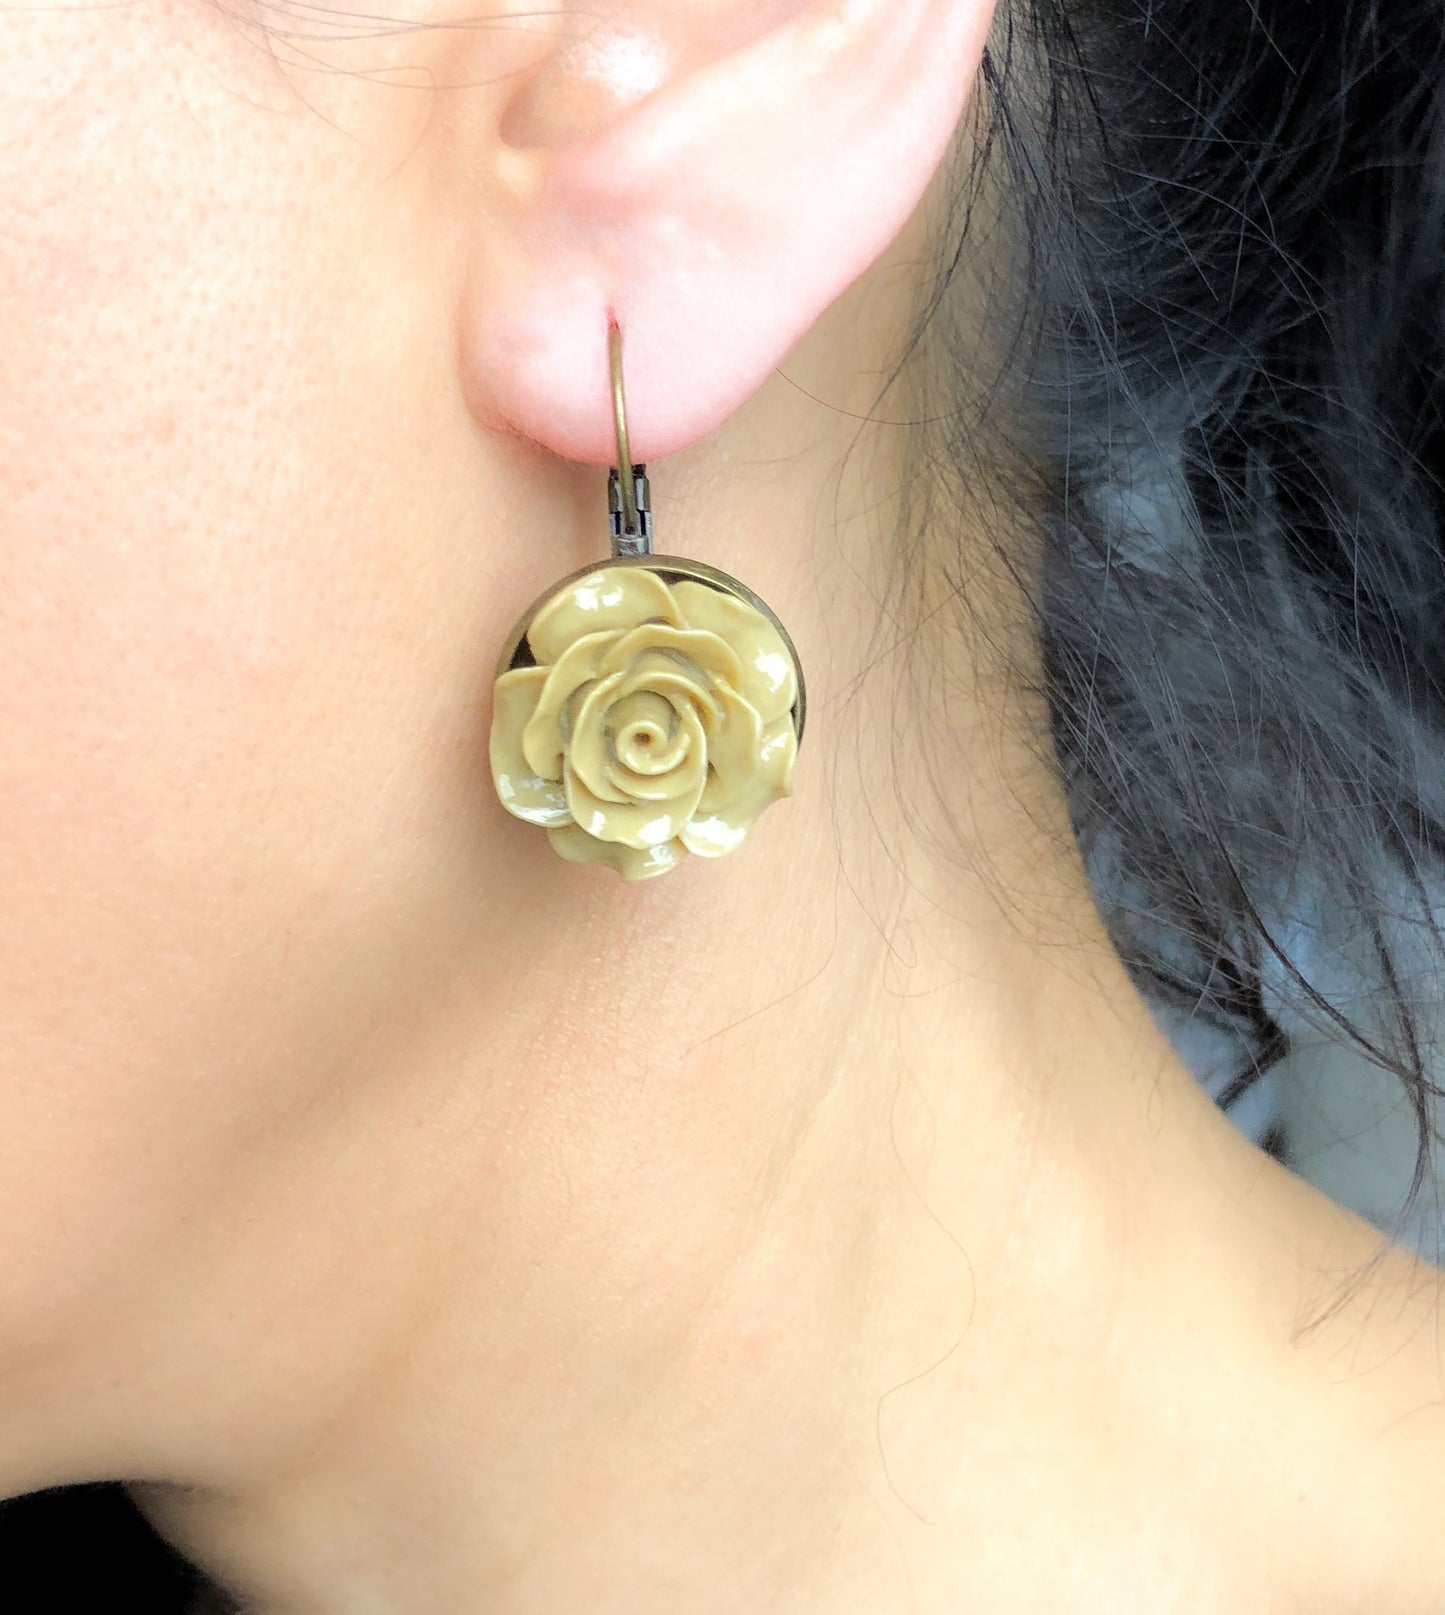 Autumns bronze earrings in vintage style